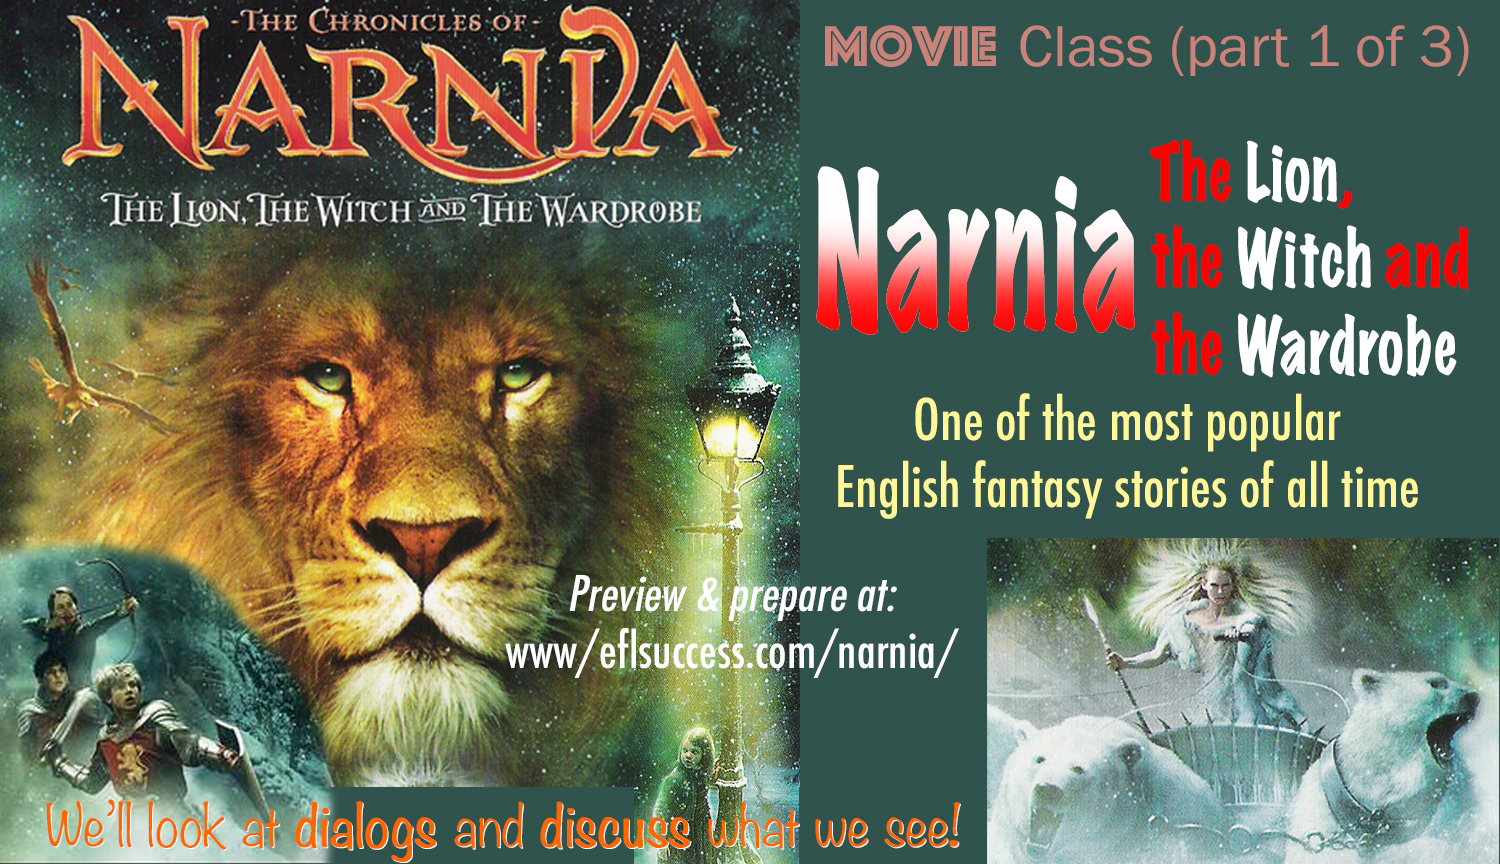 Narnia poster (part 1)